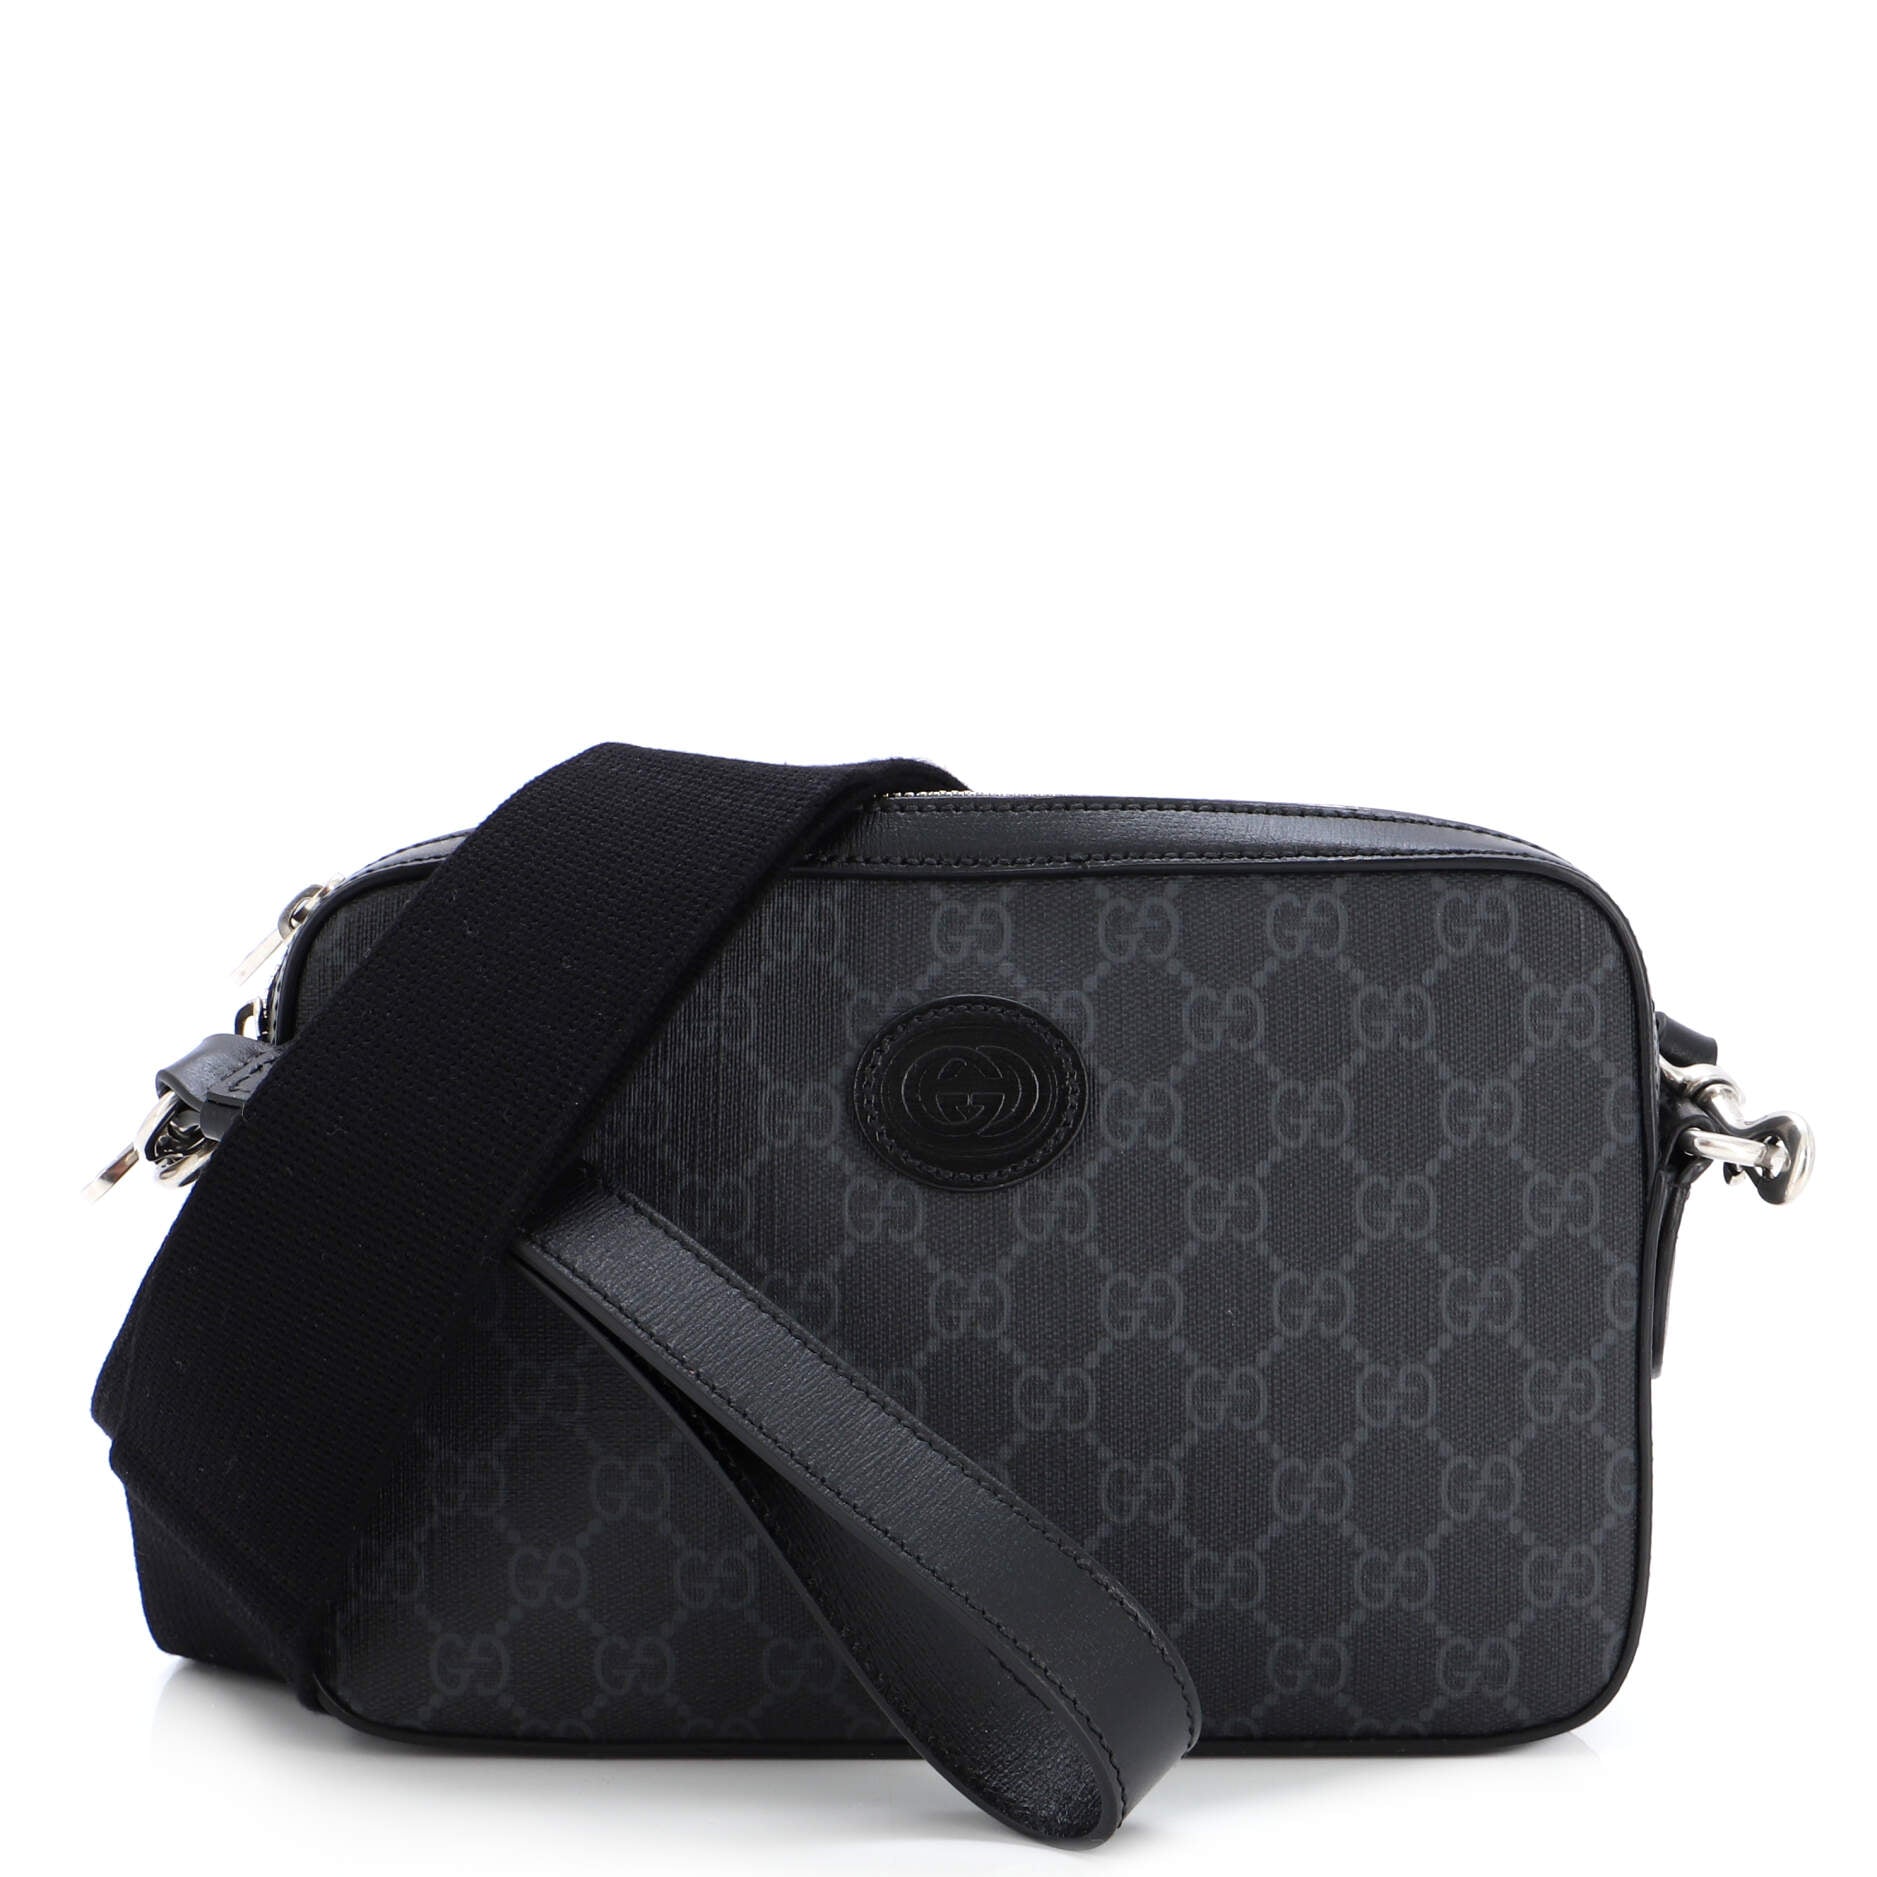 Garment bag with Interlocking G in black GG Supreme